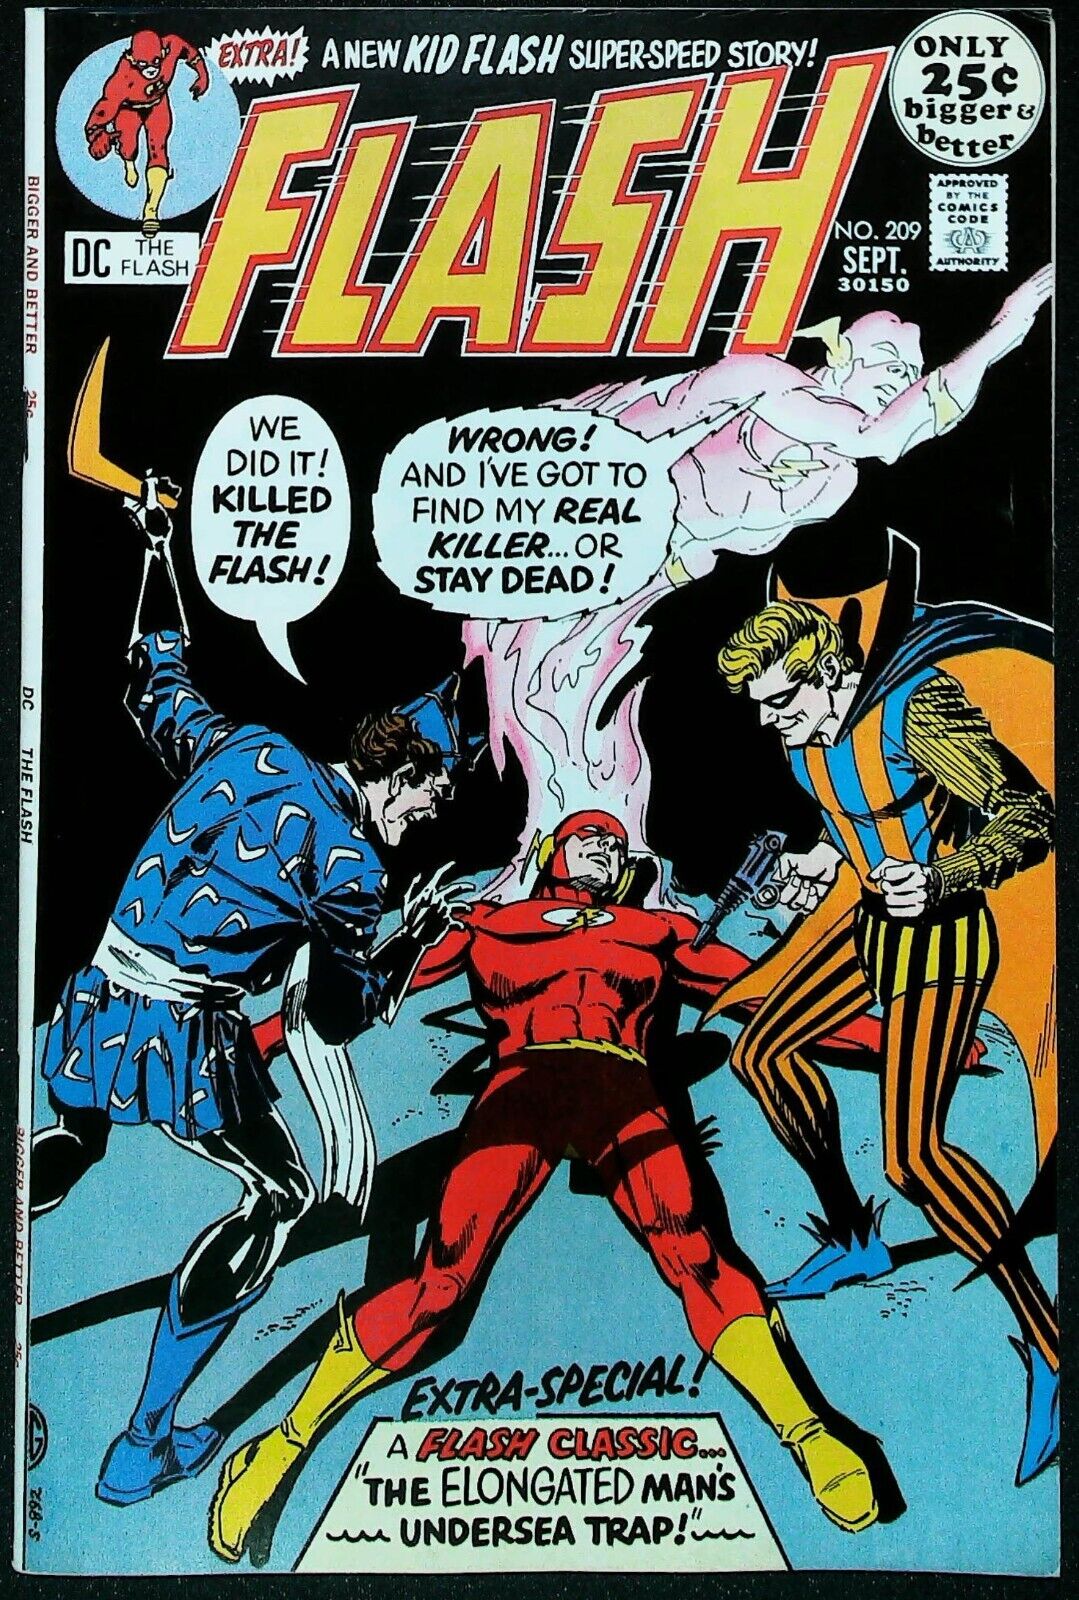 The Flash #209 Vol 1 (1971) - Very Fine Range